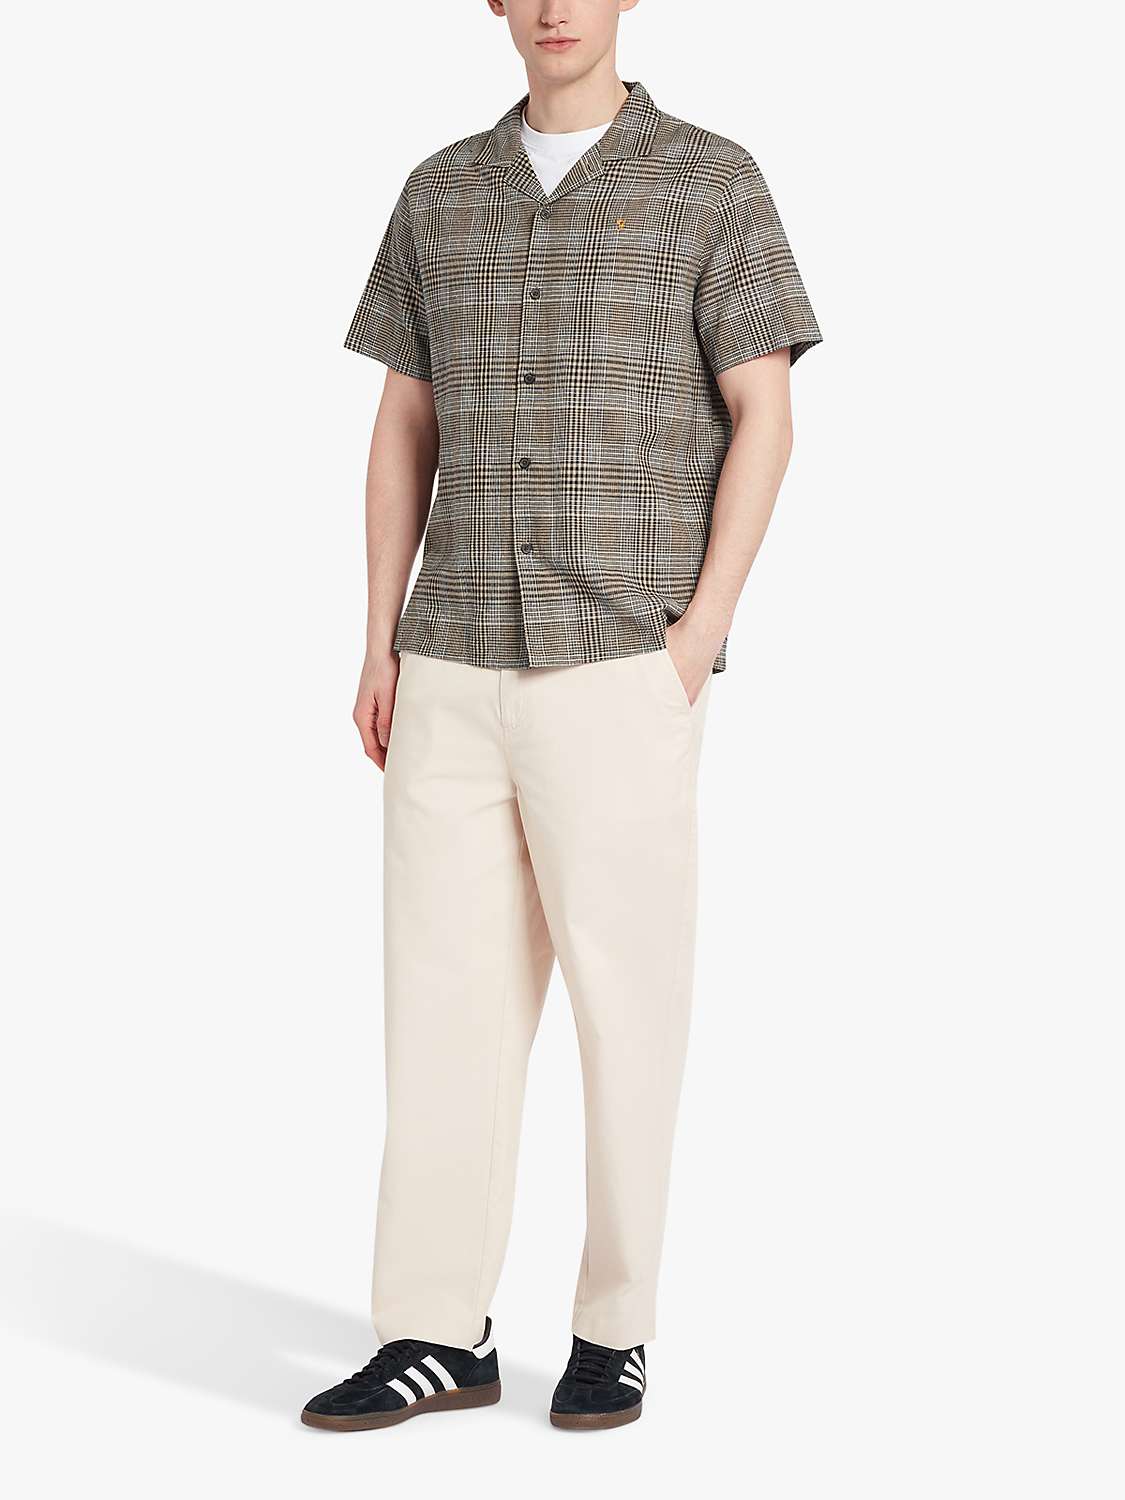 Buy Farah Yute Short Sleeve Linen Blend Shirt, True Khaki Online at johnlewis.com